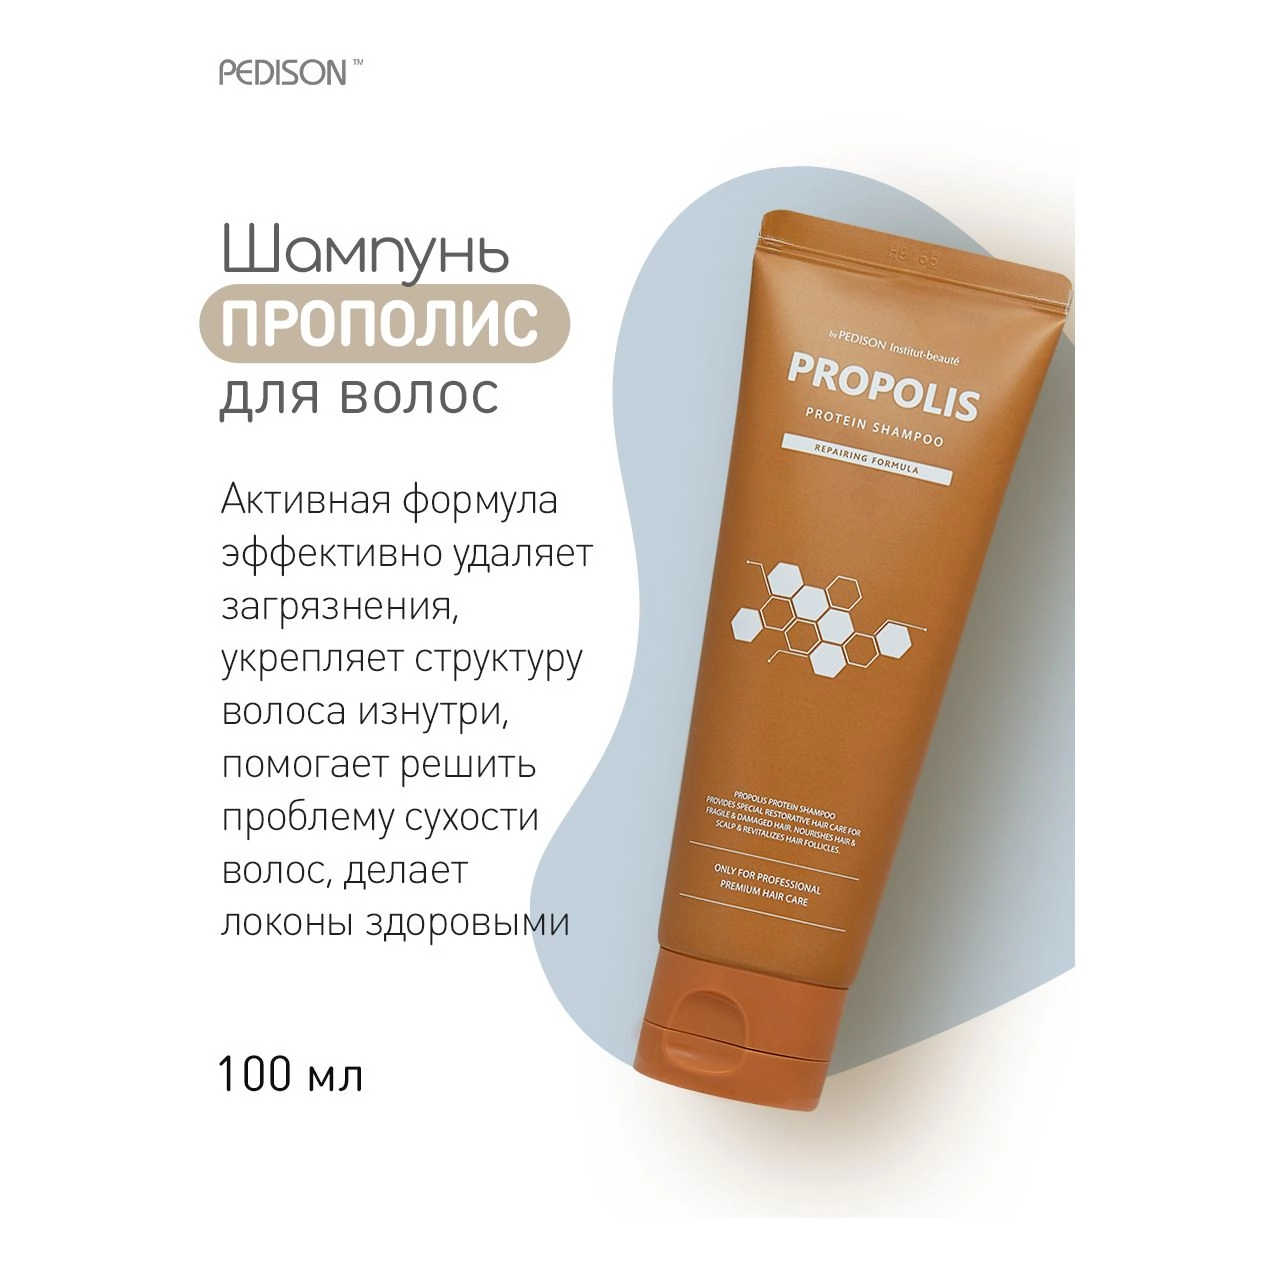 Шампунь для волос "Прополис" - Pedison Institut-Beaute Propolis Protein Shampoo, 100 мл - фото N4